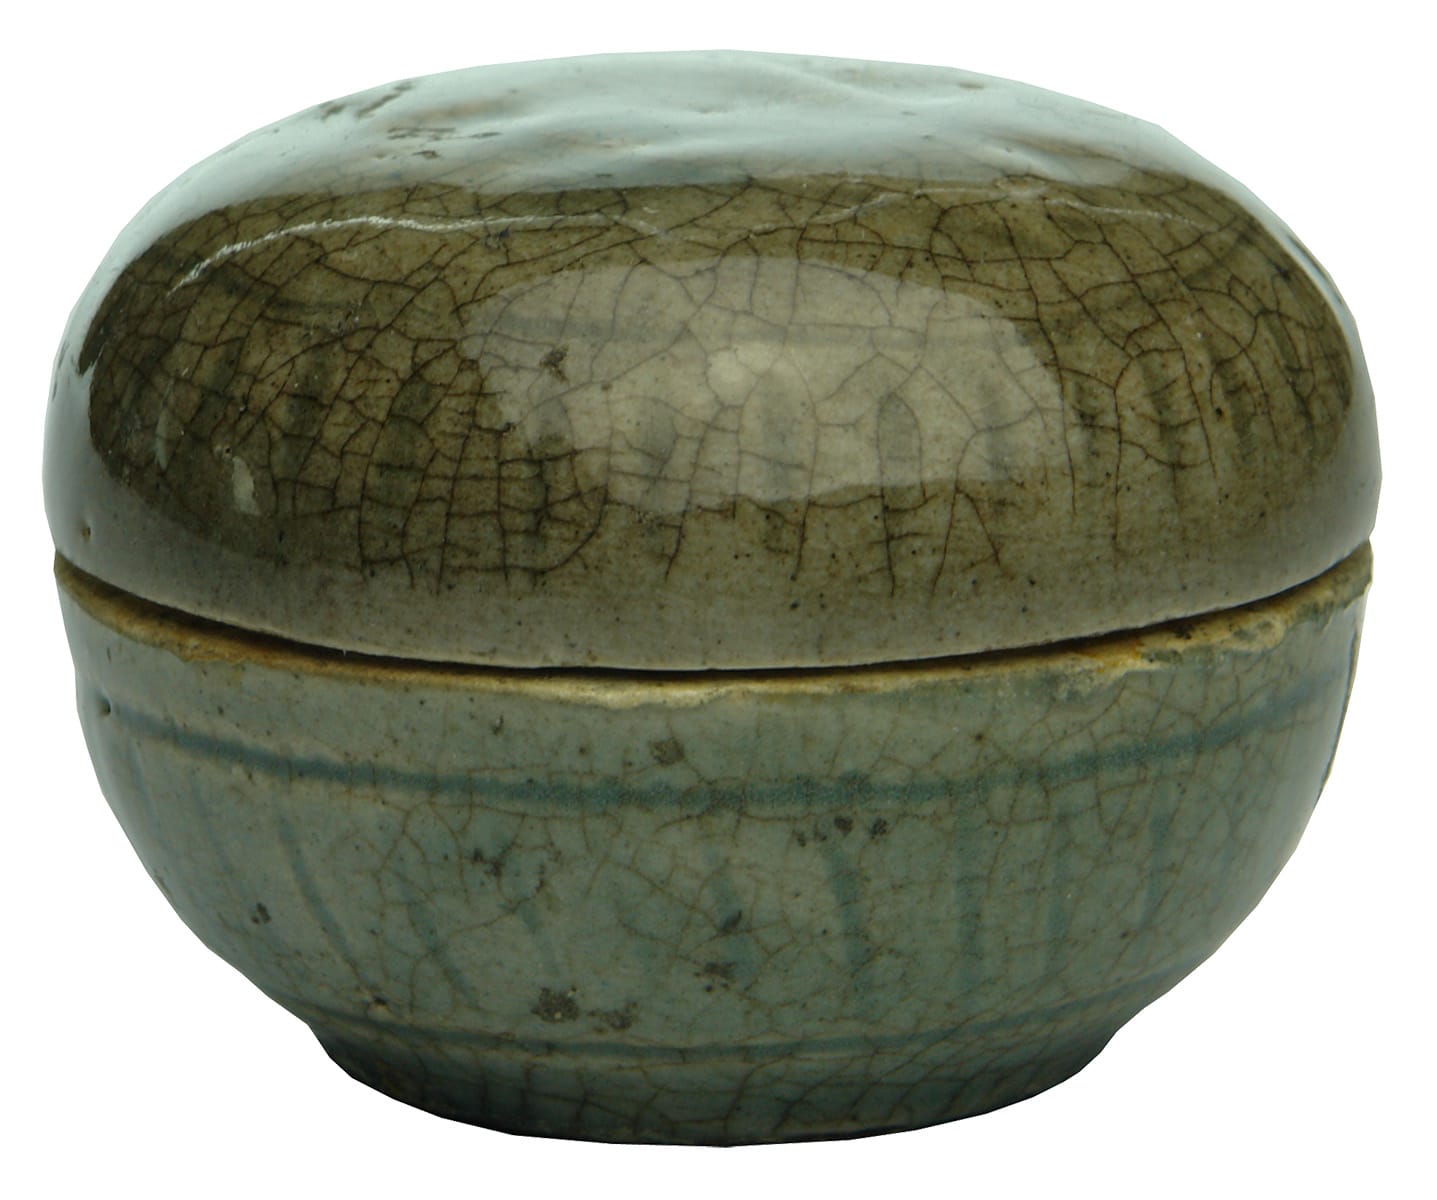 Ceramic Chinese Pot Lid